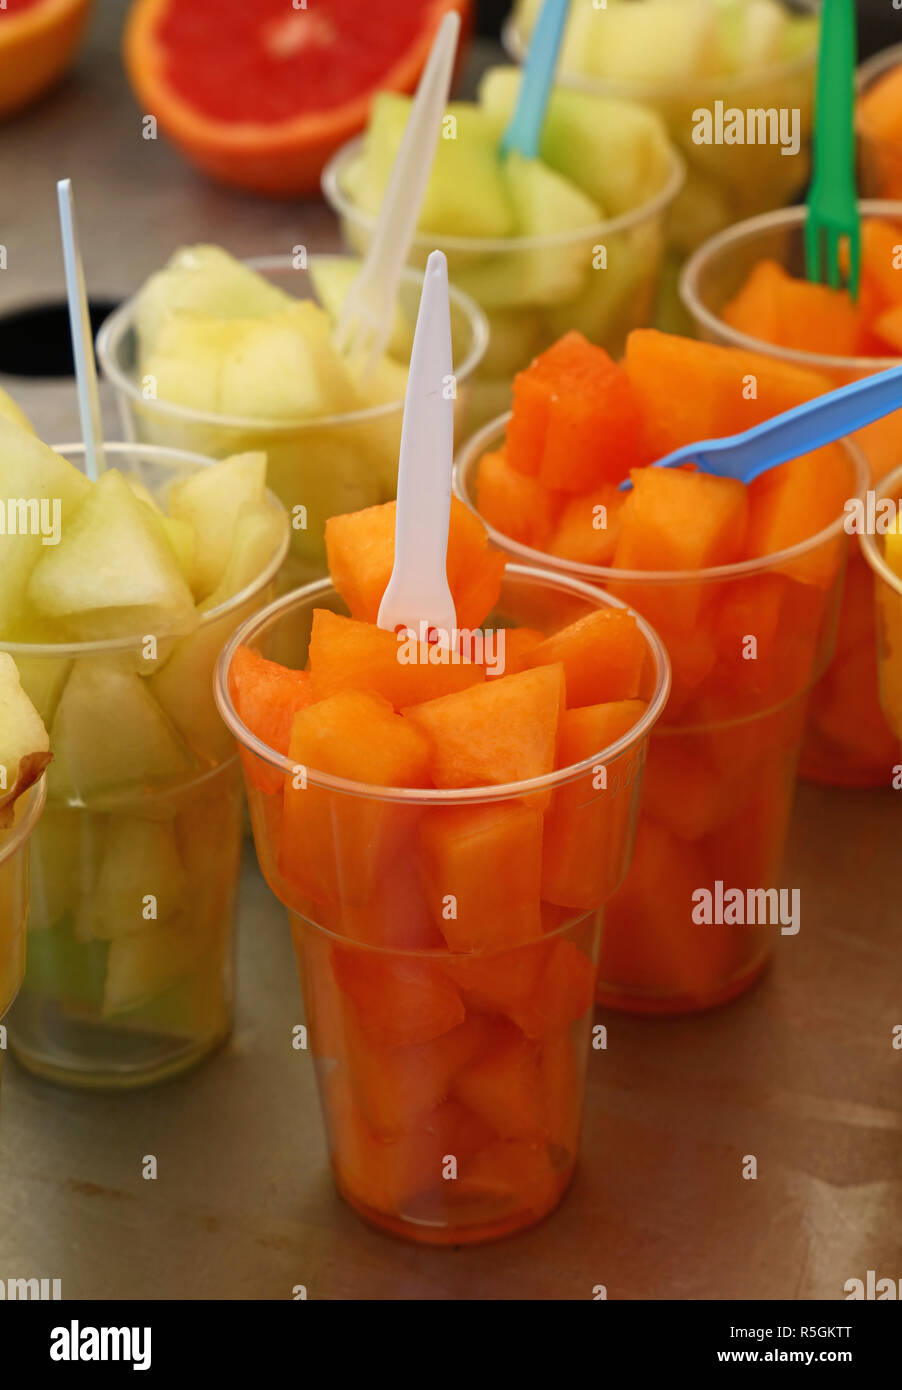 Macedonia di frutta fresca cubetti di melone in bicchieri di plastica Foto  stock - Alamy